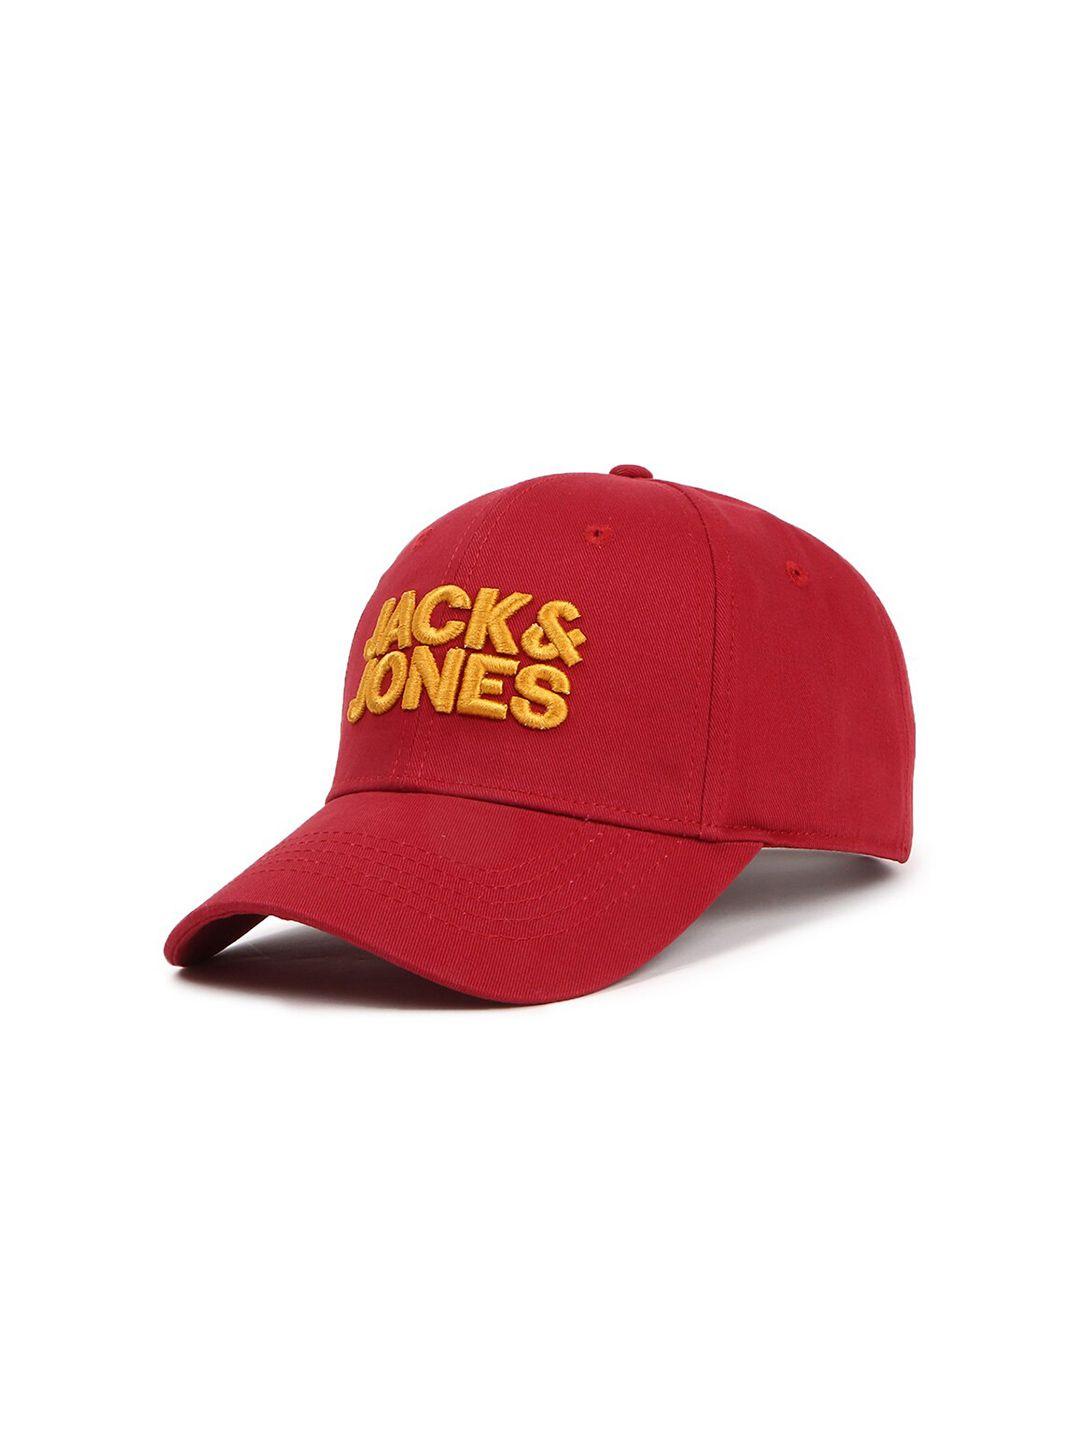 jack & jones men red & yellow baseball cap